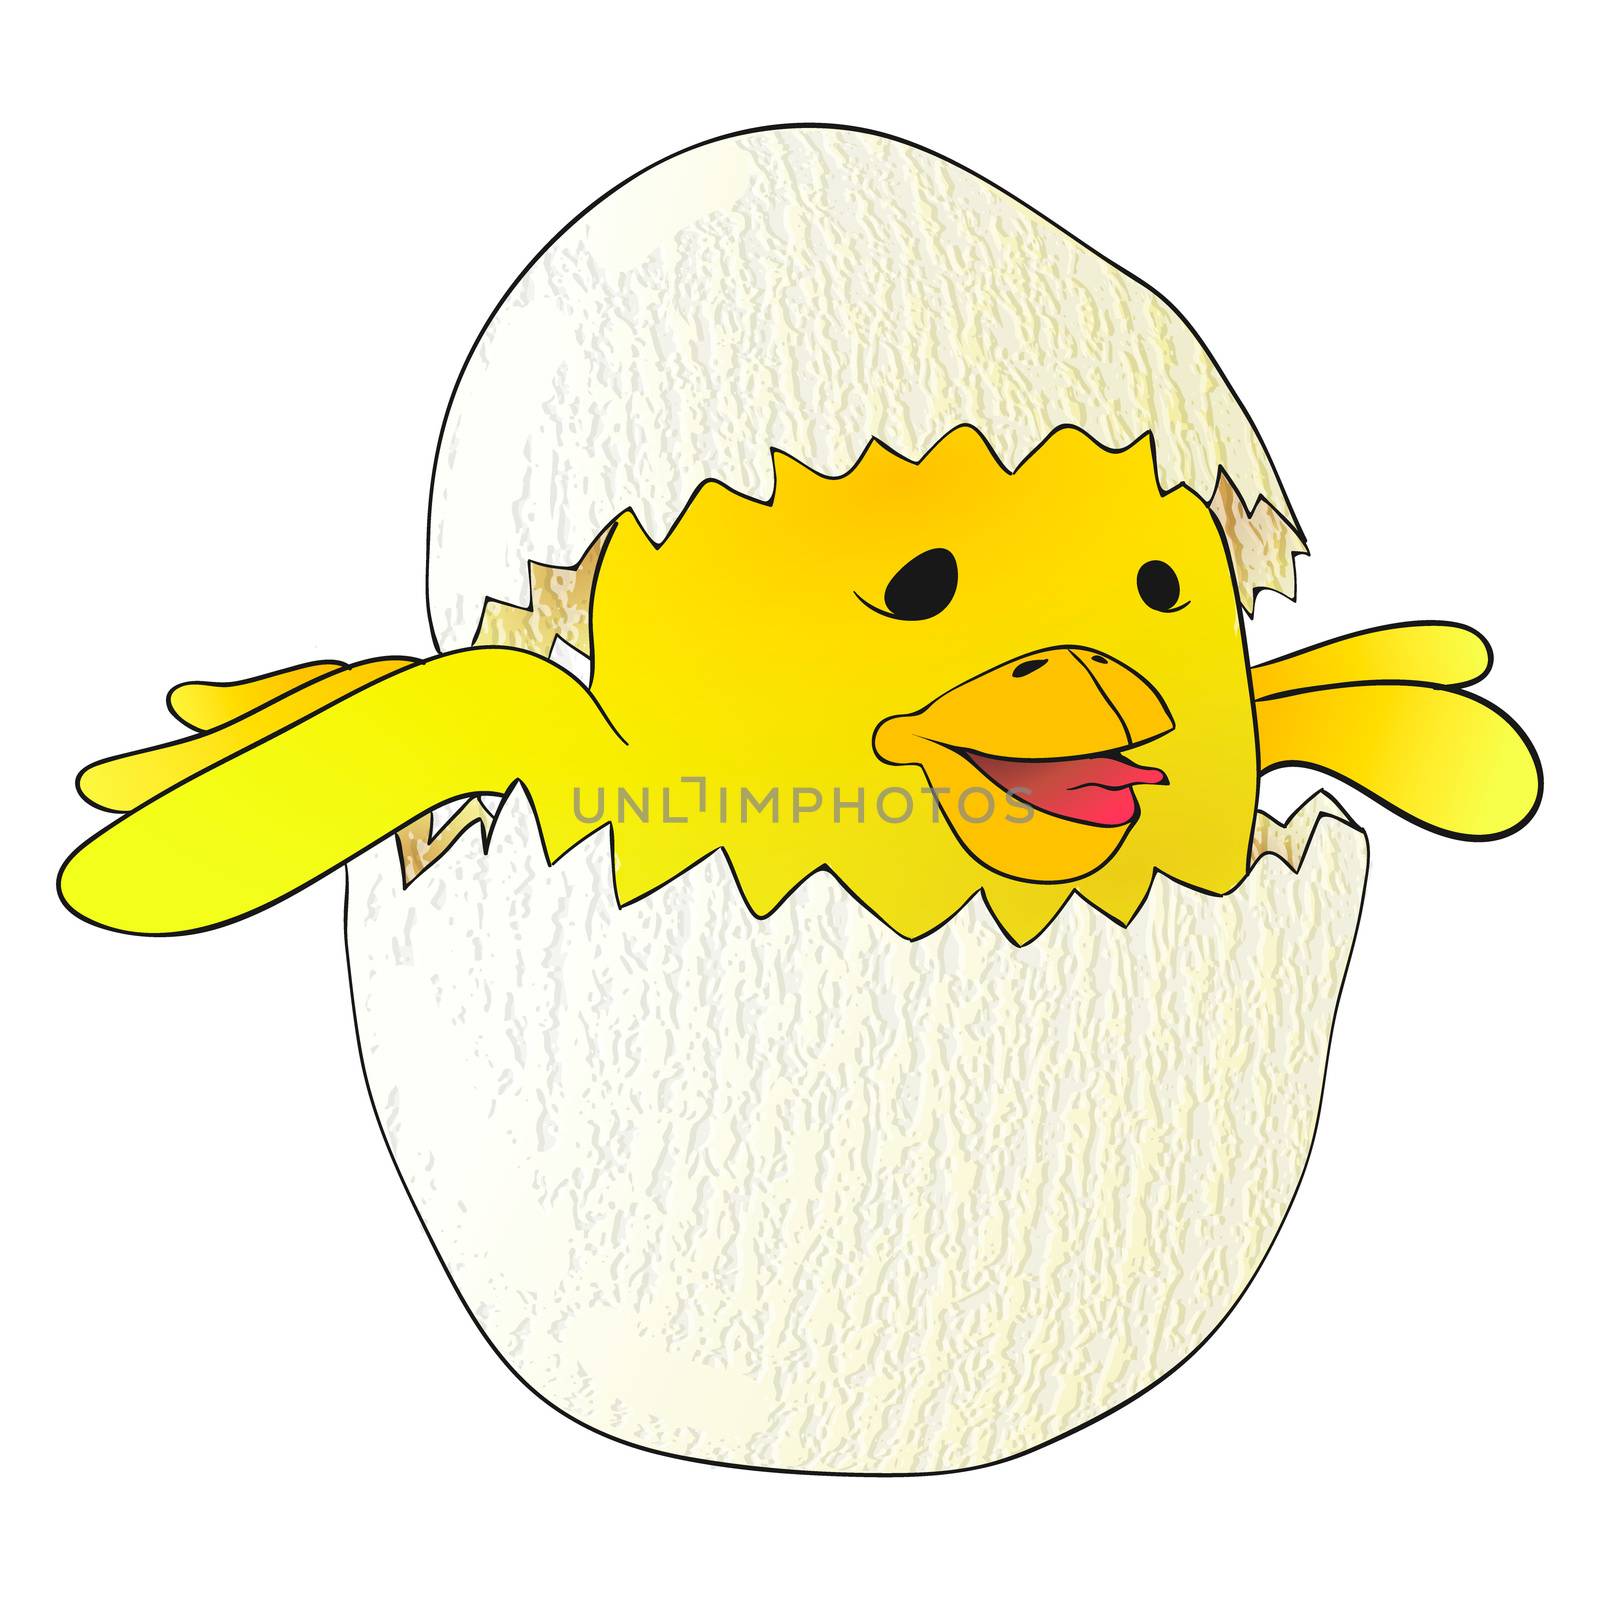 Cartoon yellow newborn chicken in the broken egg shell. by VeekSegal